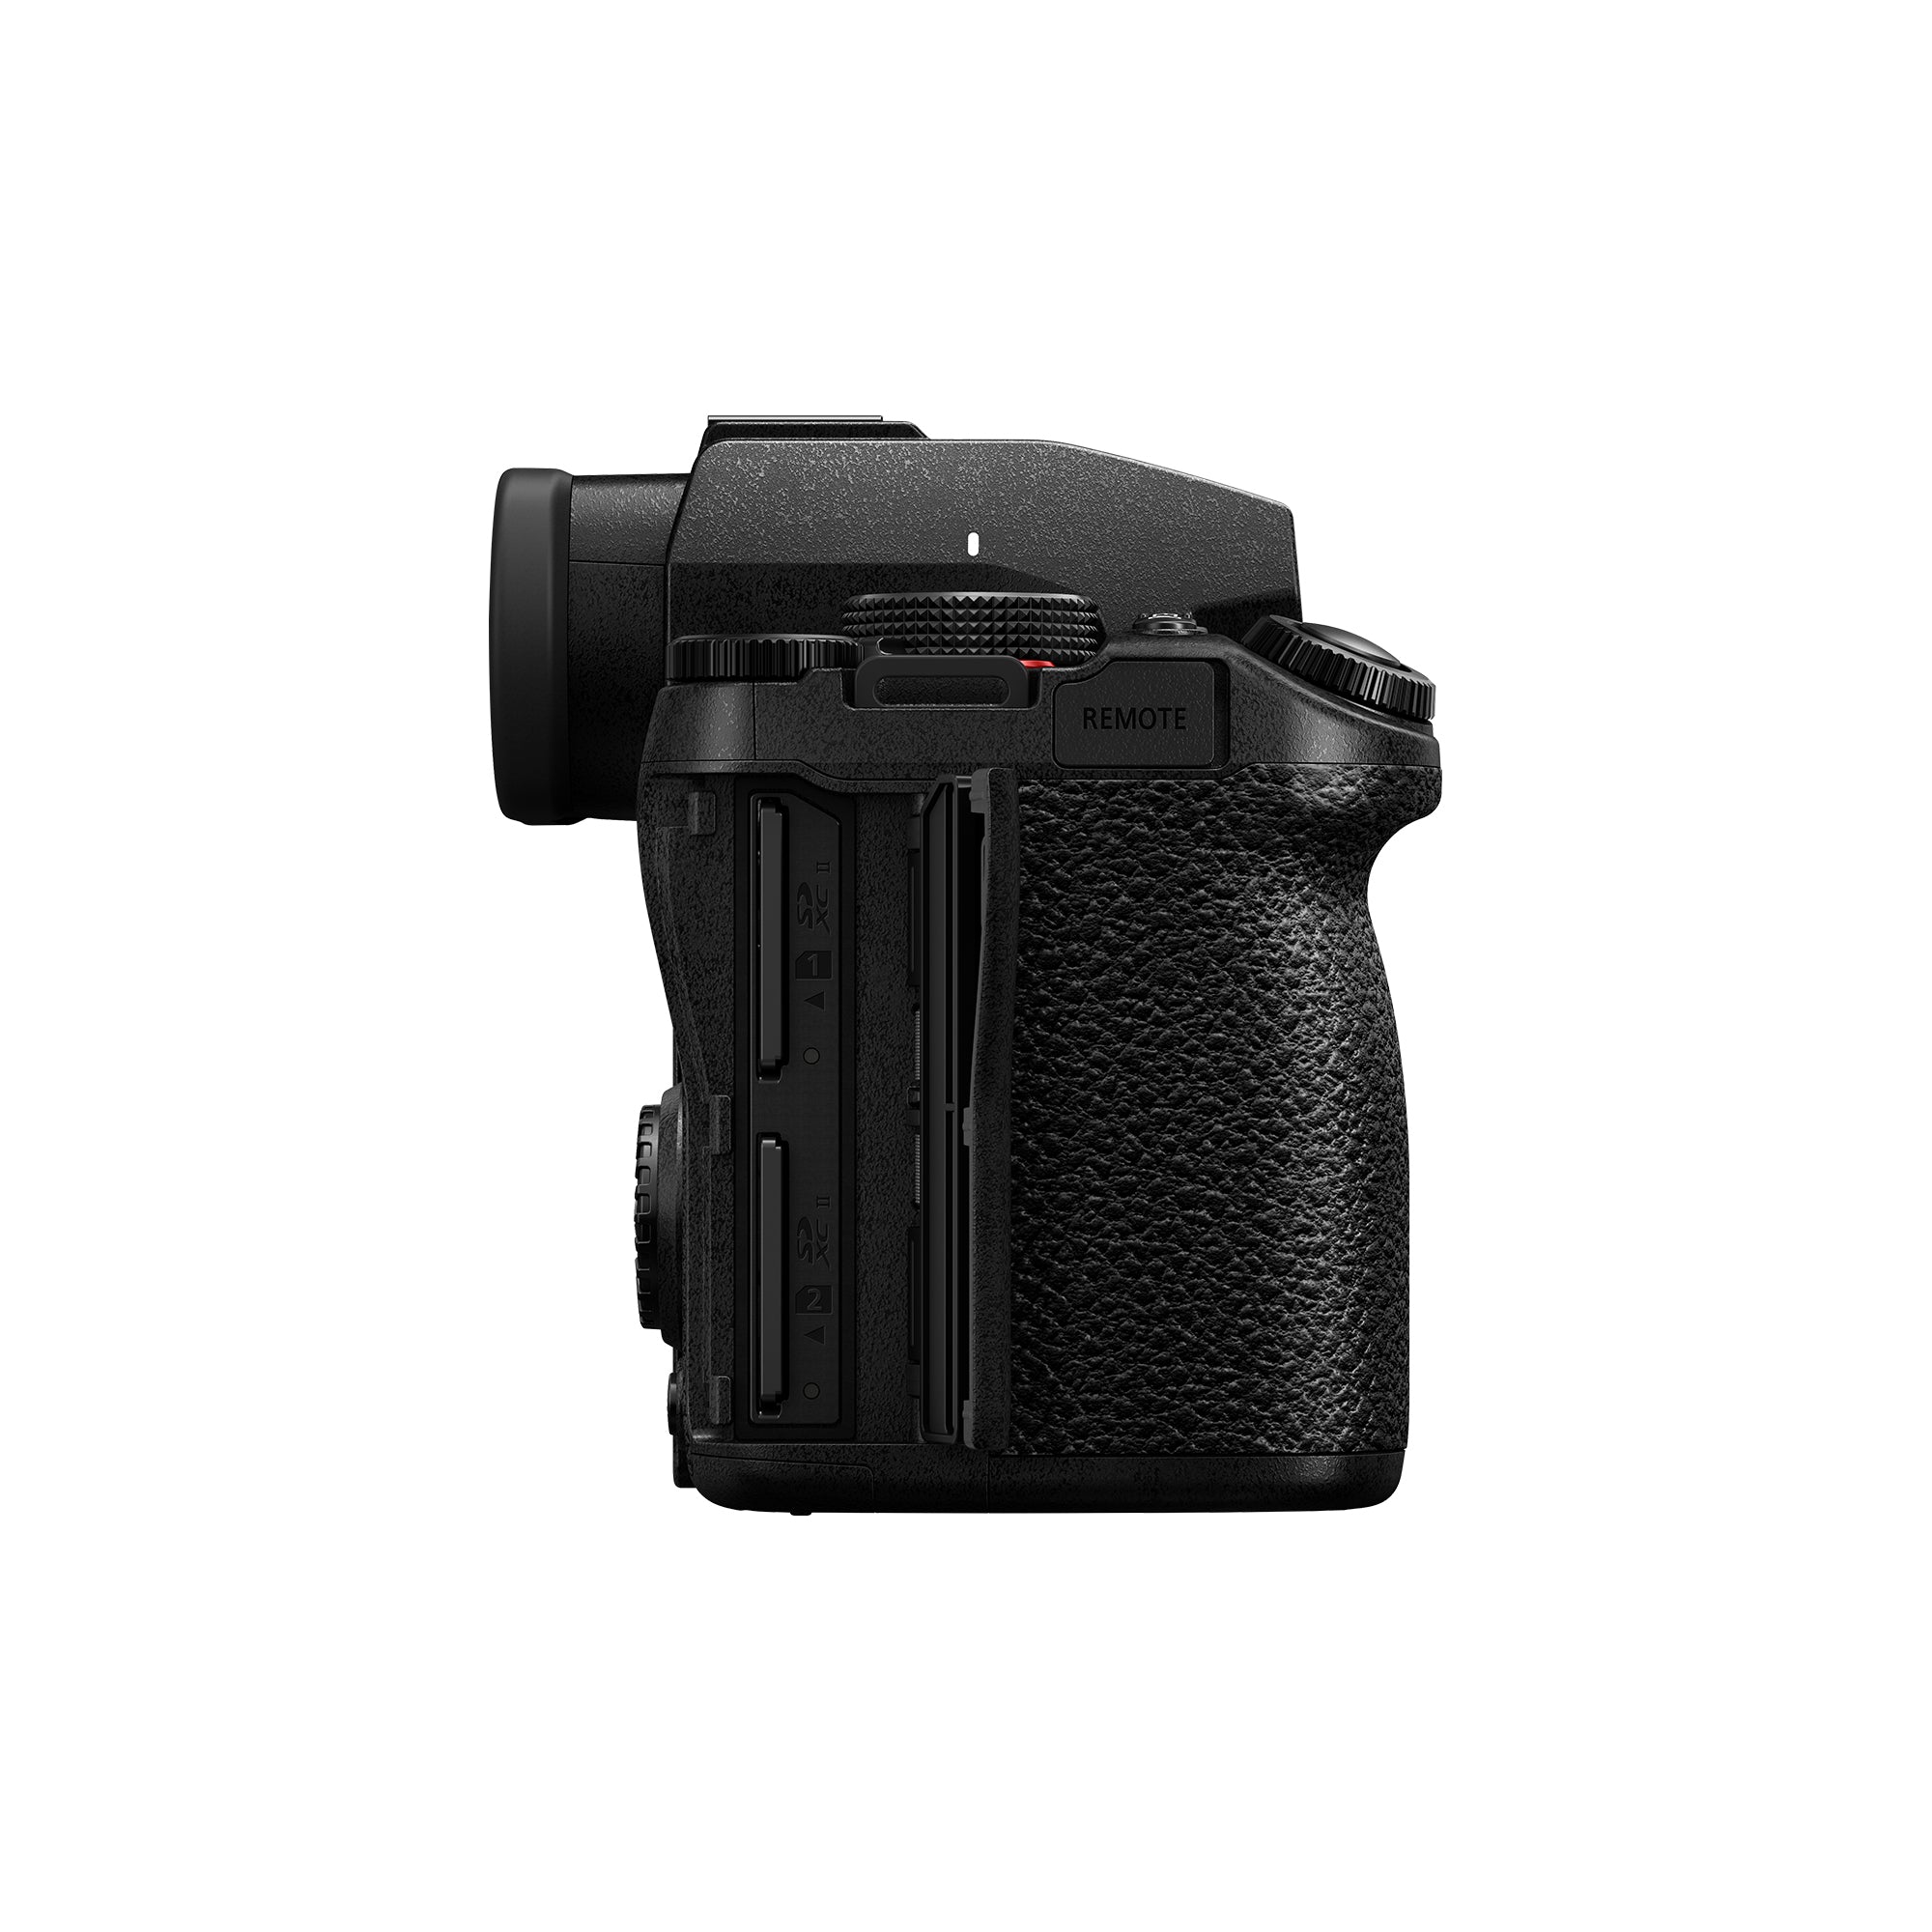 Panasonic LUMIX G9M2 Mirrorless Camera with 12-60mm F2.8-4.0 Lens - DC- G9M2LK